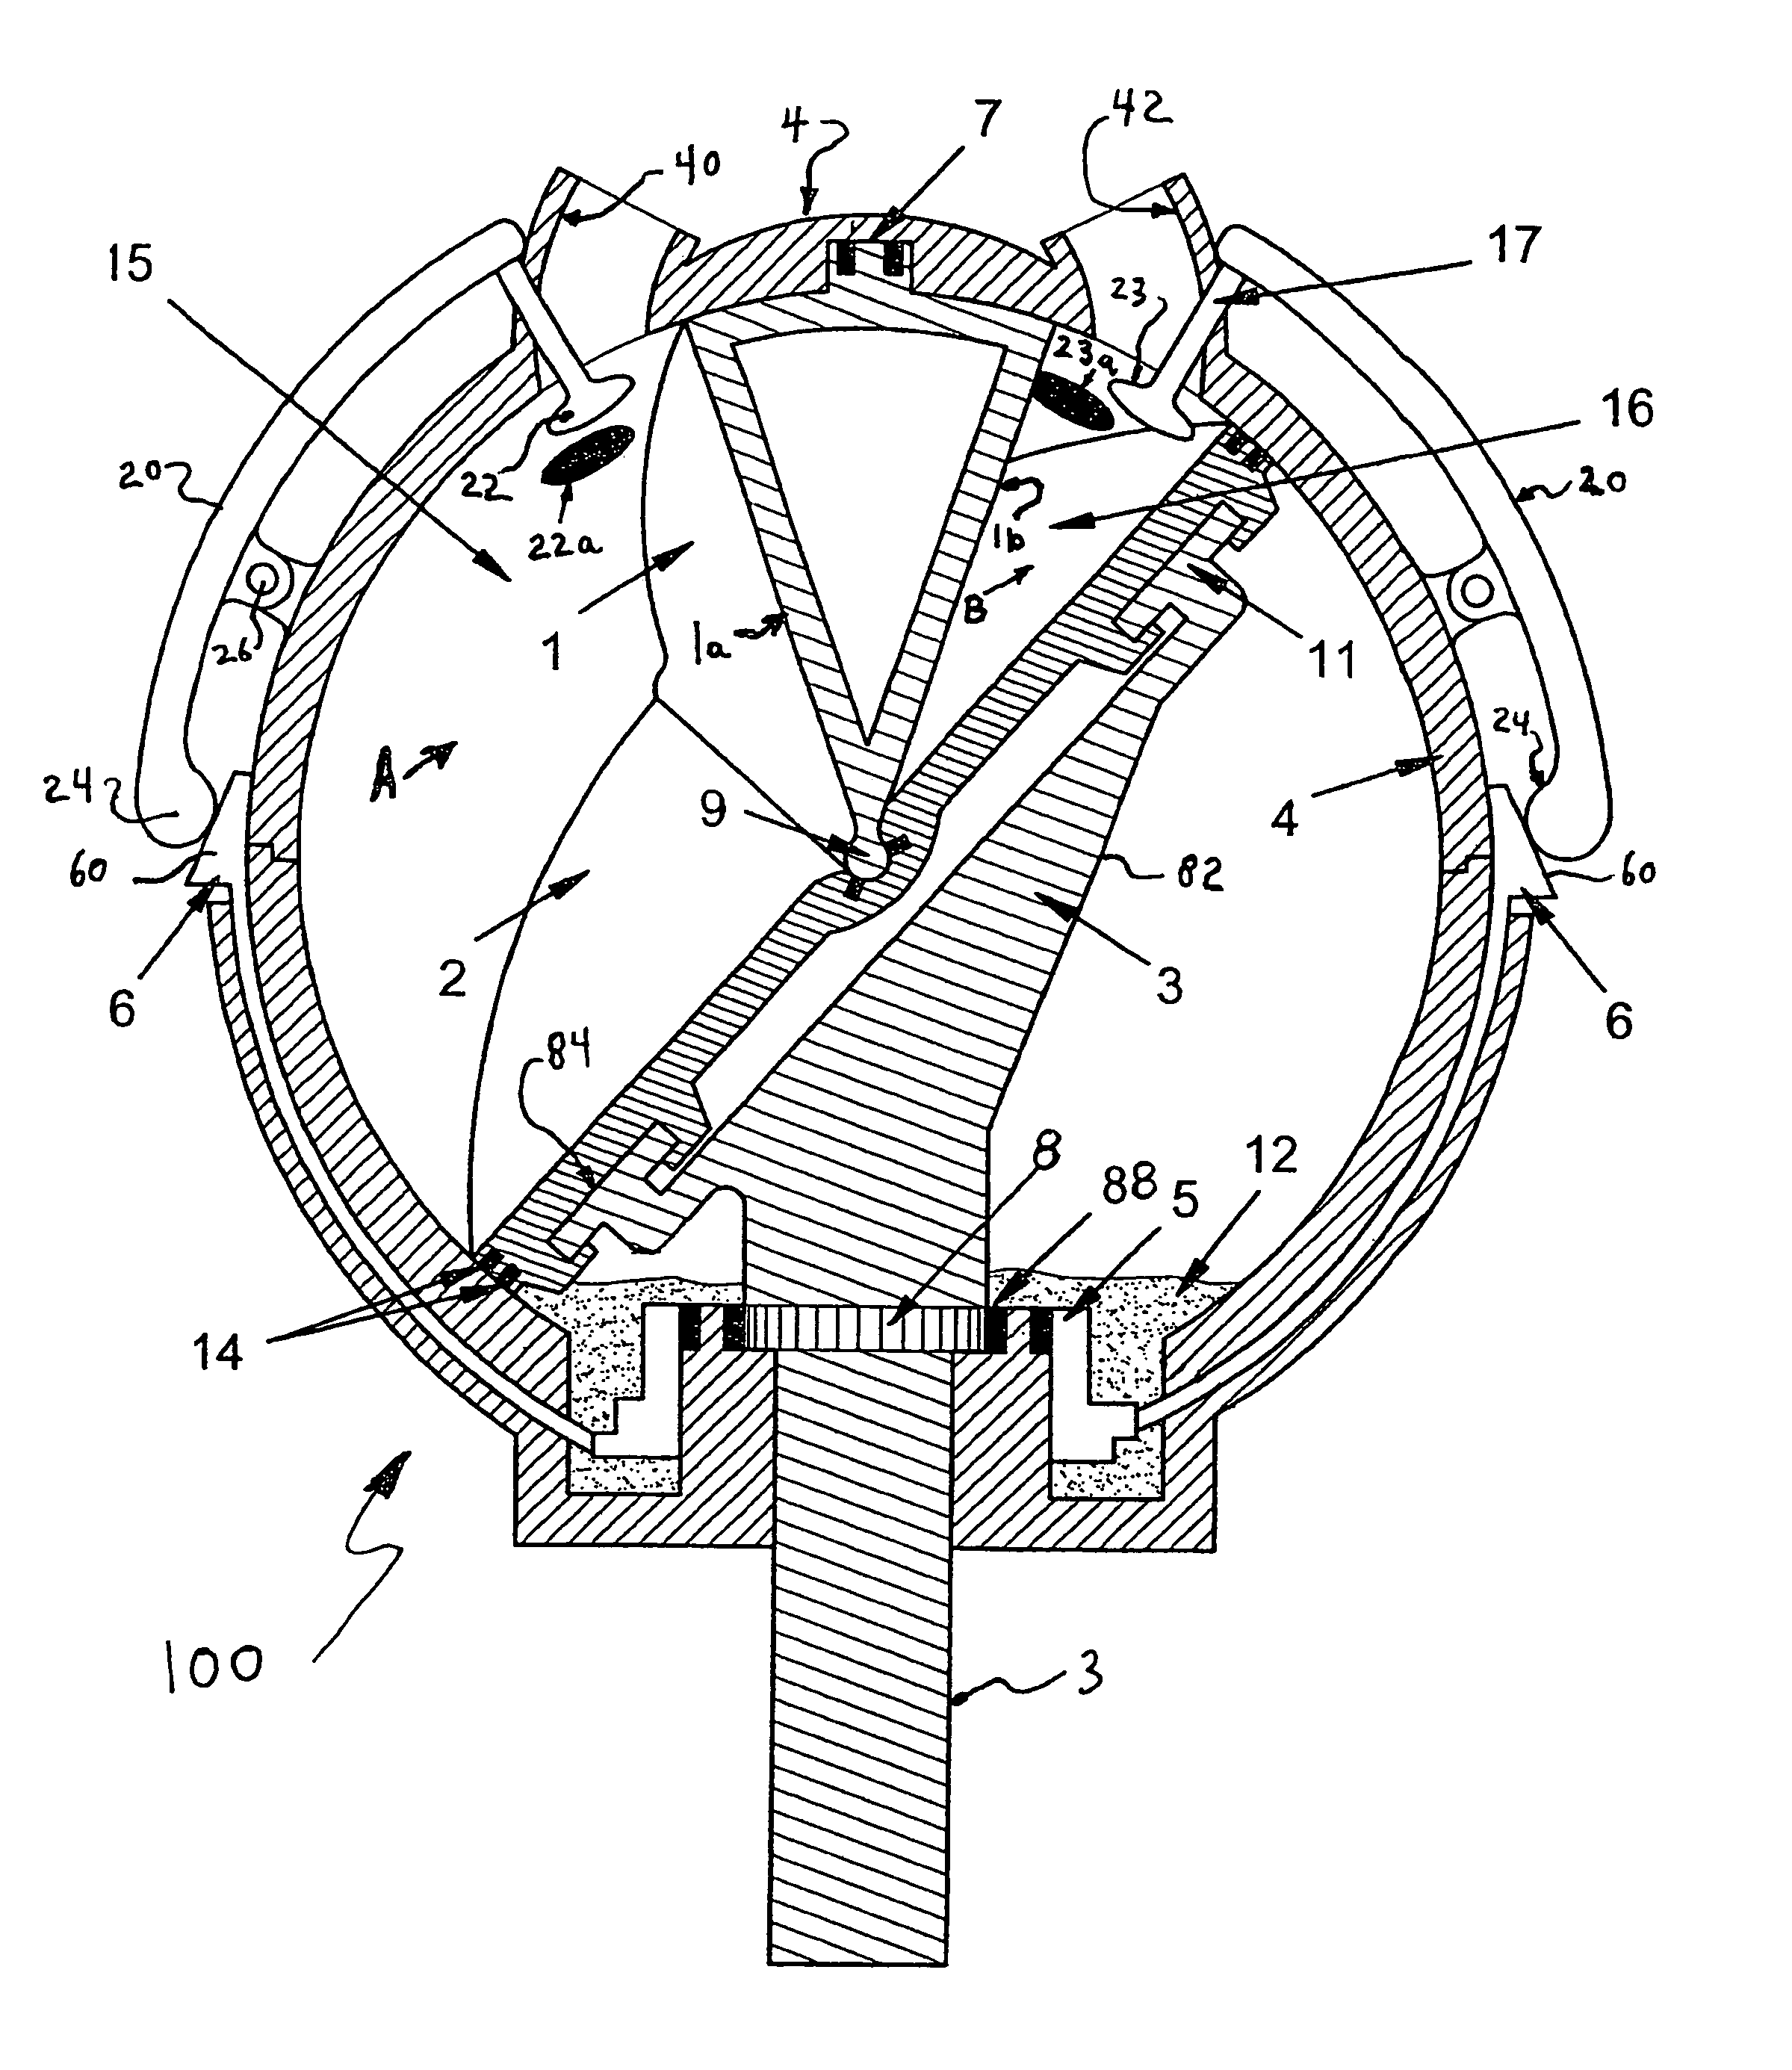 VAL rotary engine